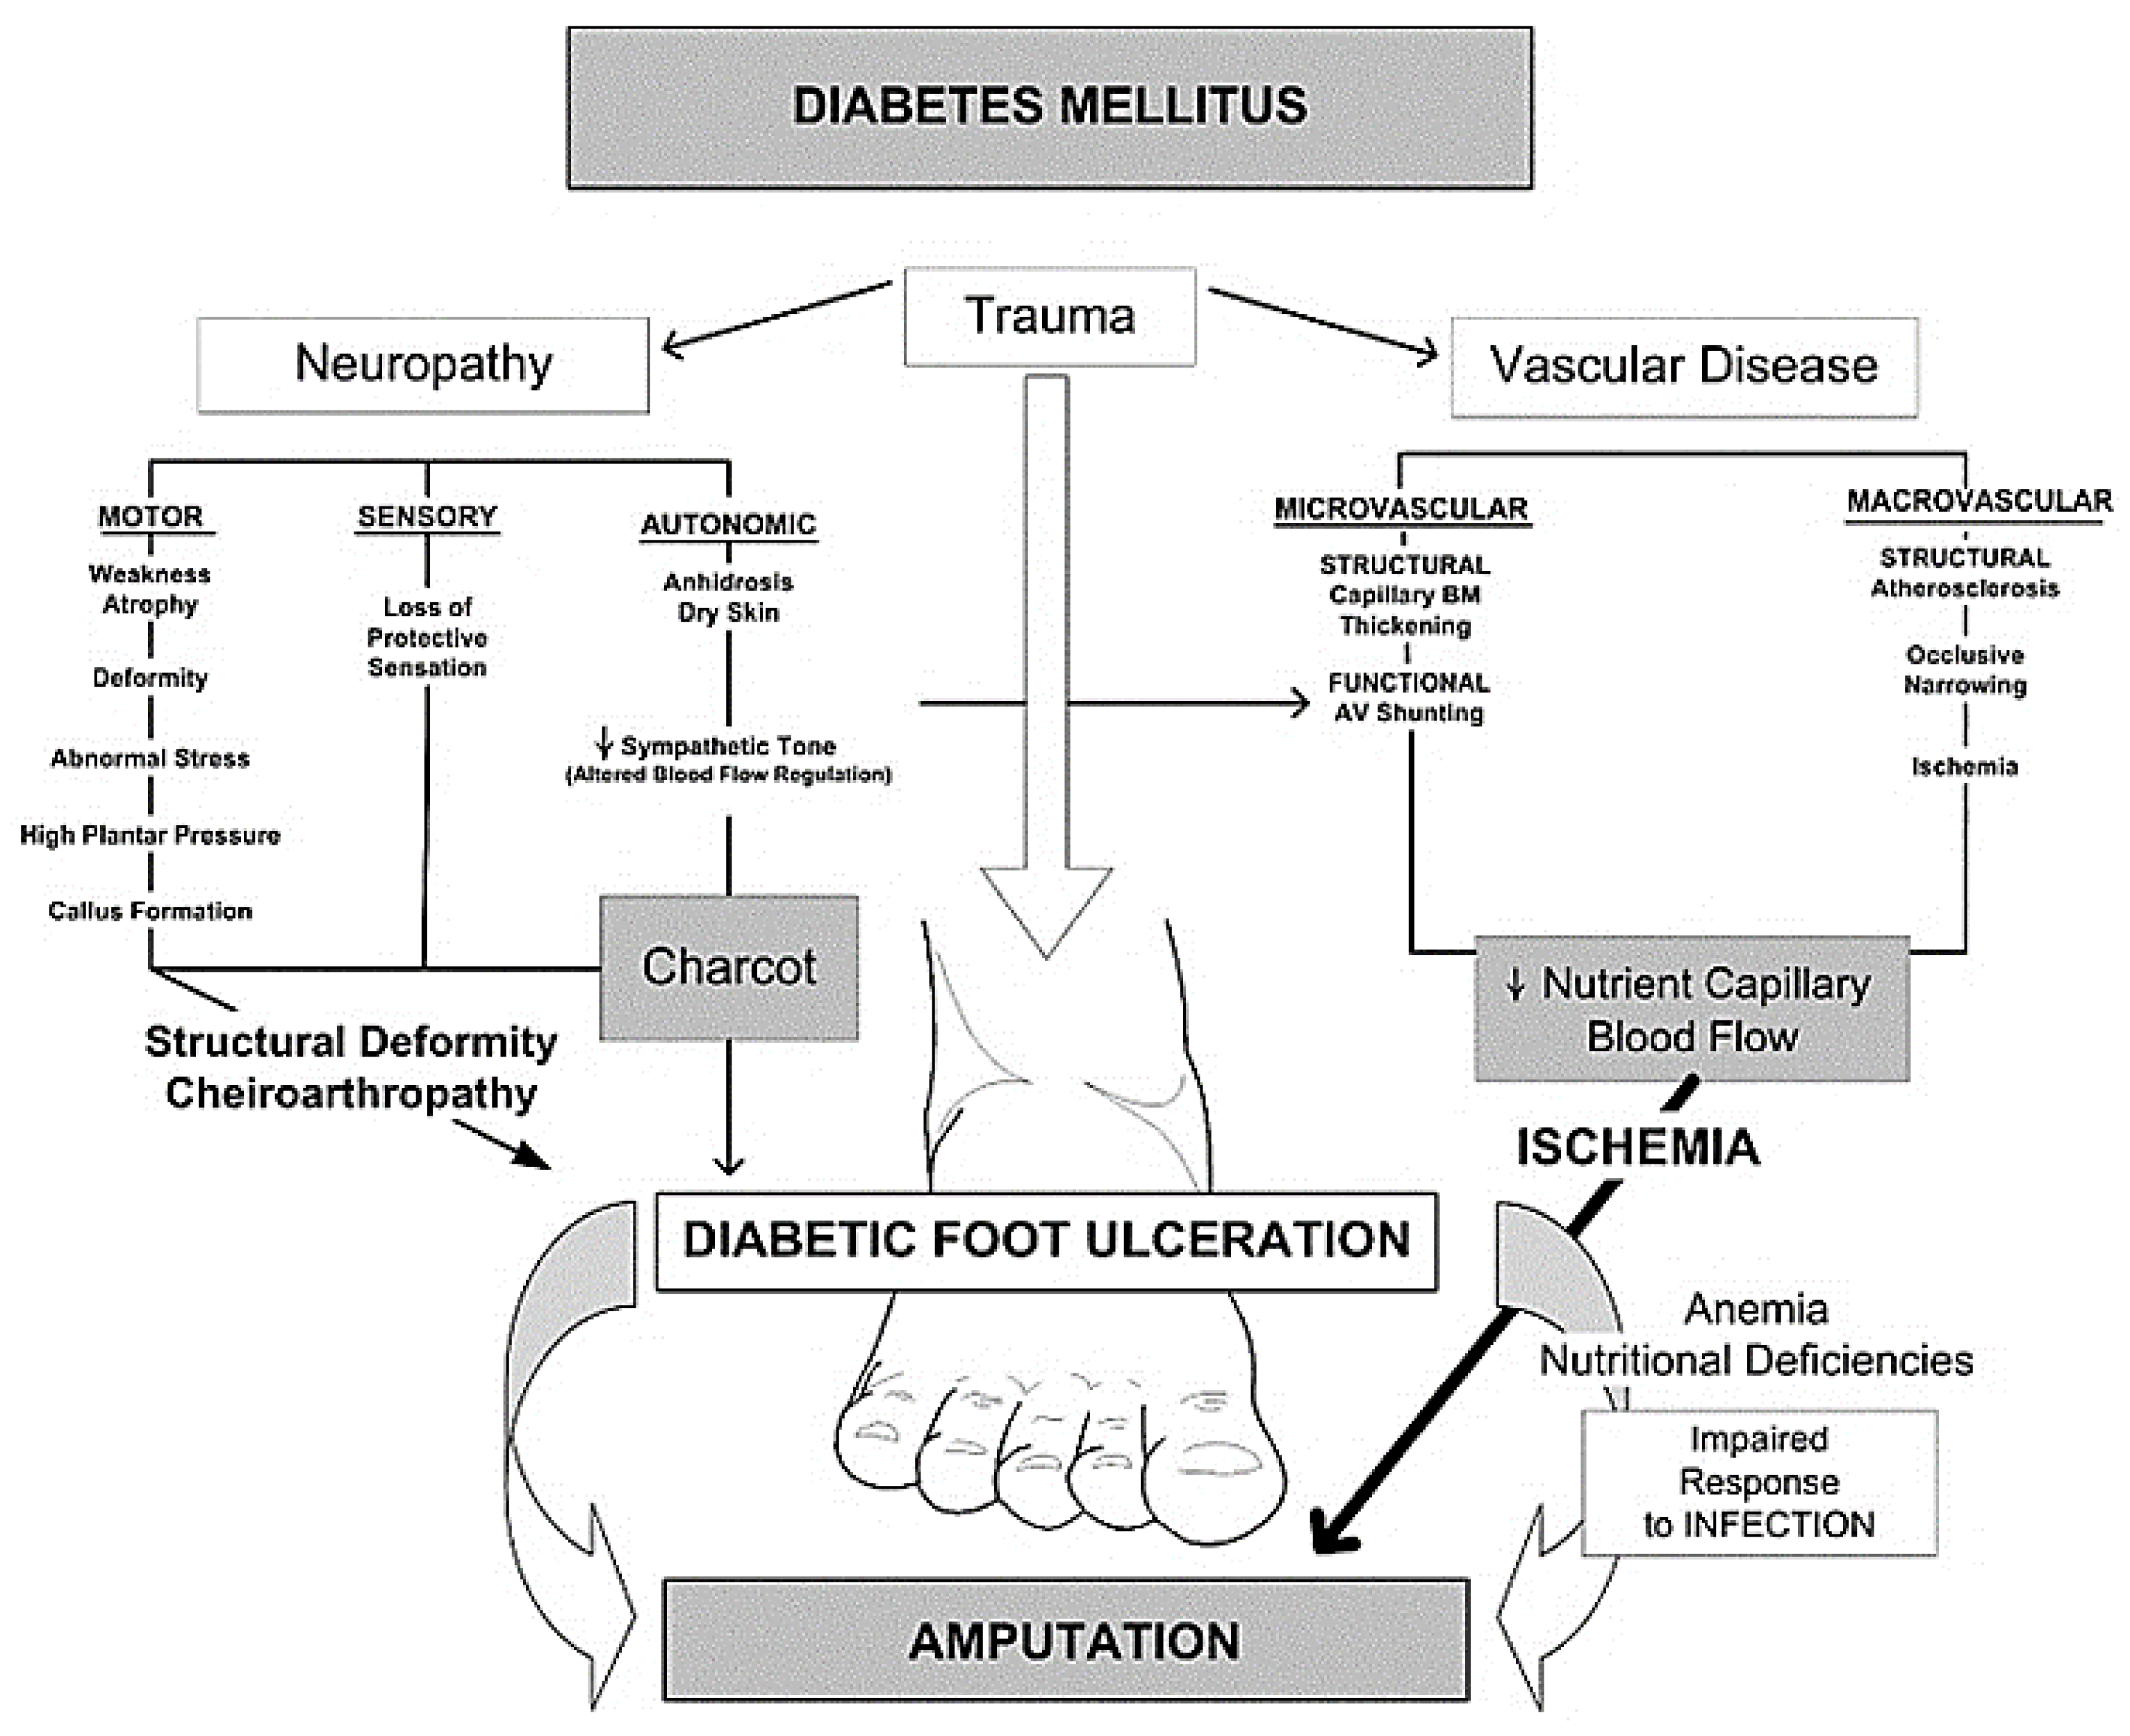 Cetosis diabetica proceso fisiológico